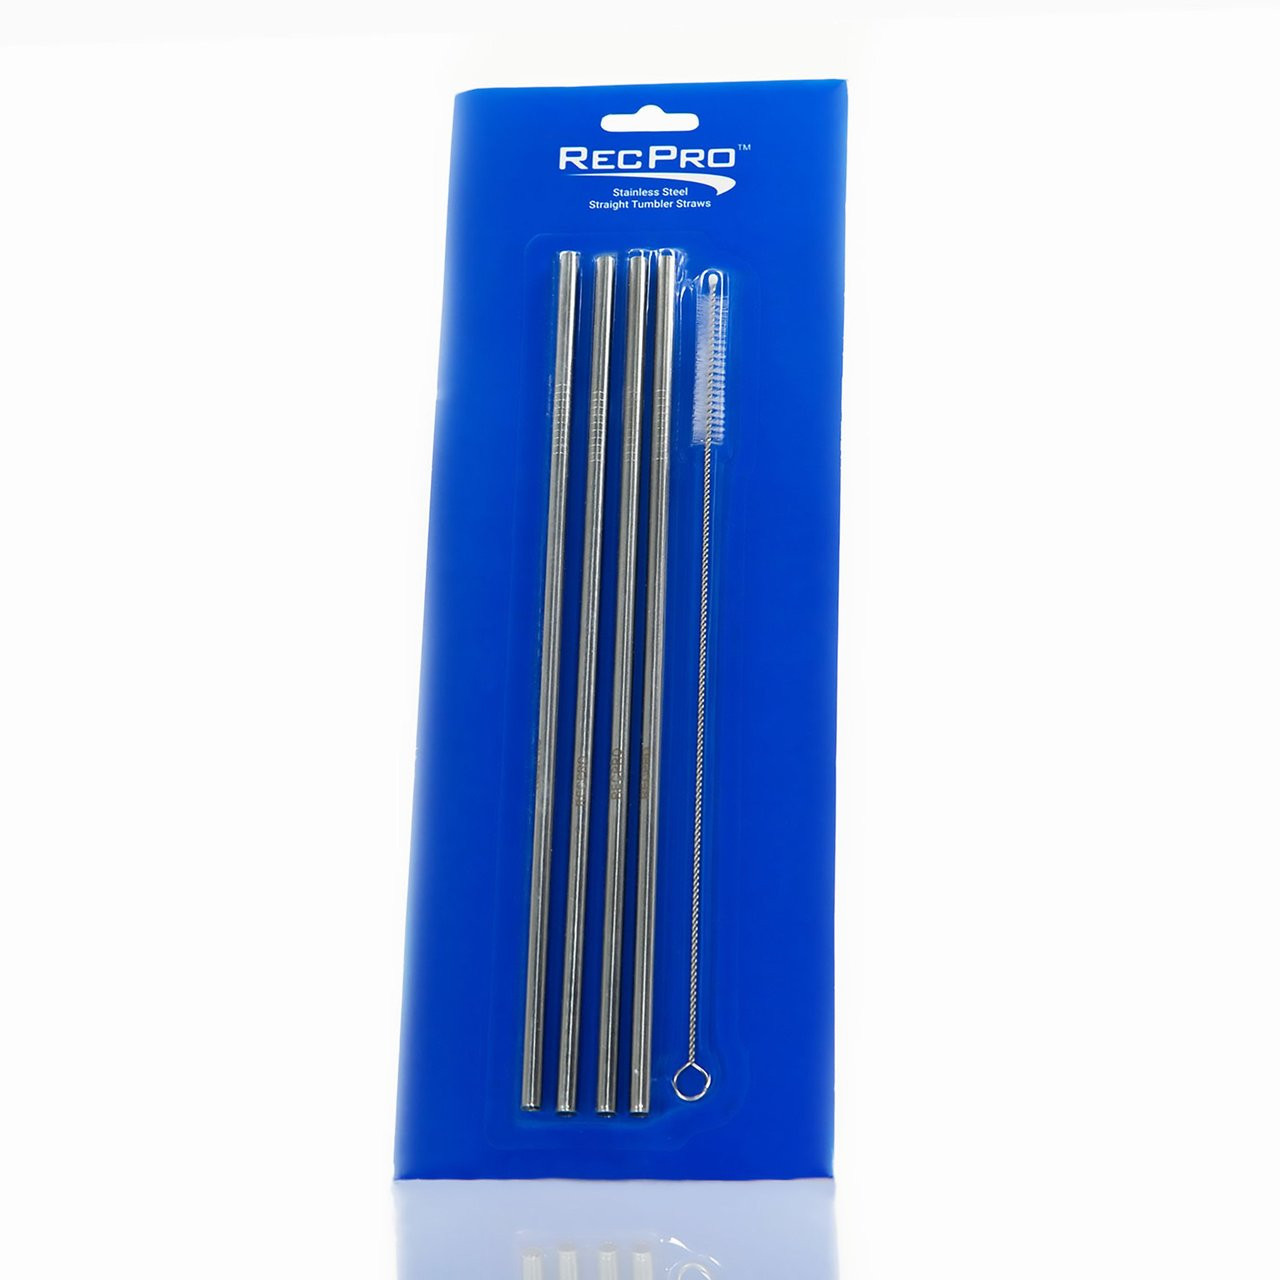 4 LONG Stainless Steel Straws fits 30 oz Yeti Tumbler Rambler Cups